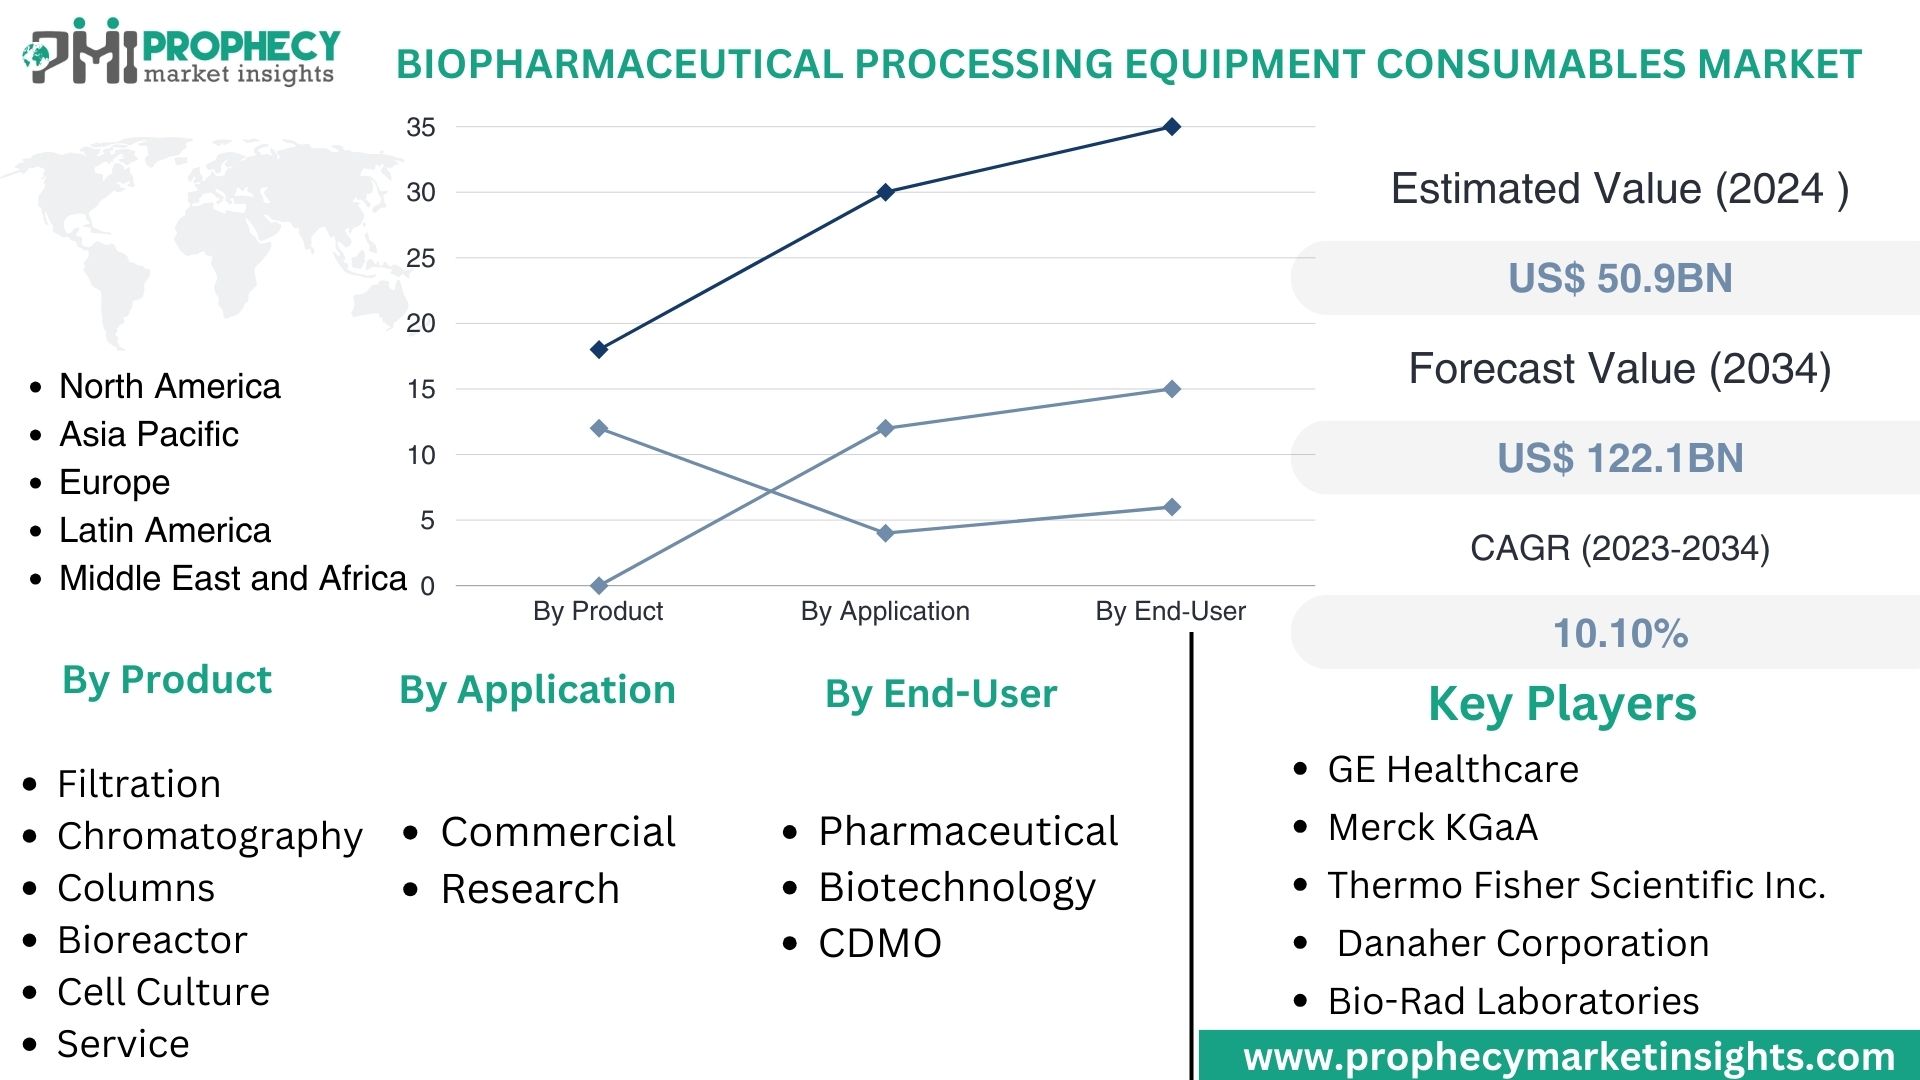 Biopharmaceutical Processing Equipment Consumables Market